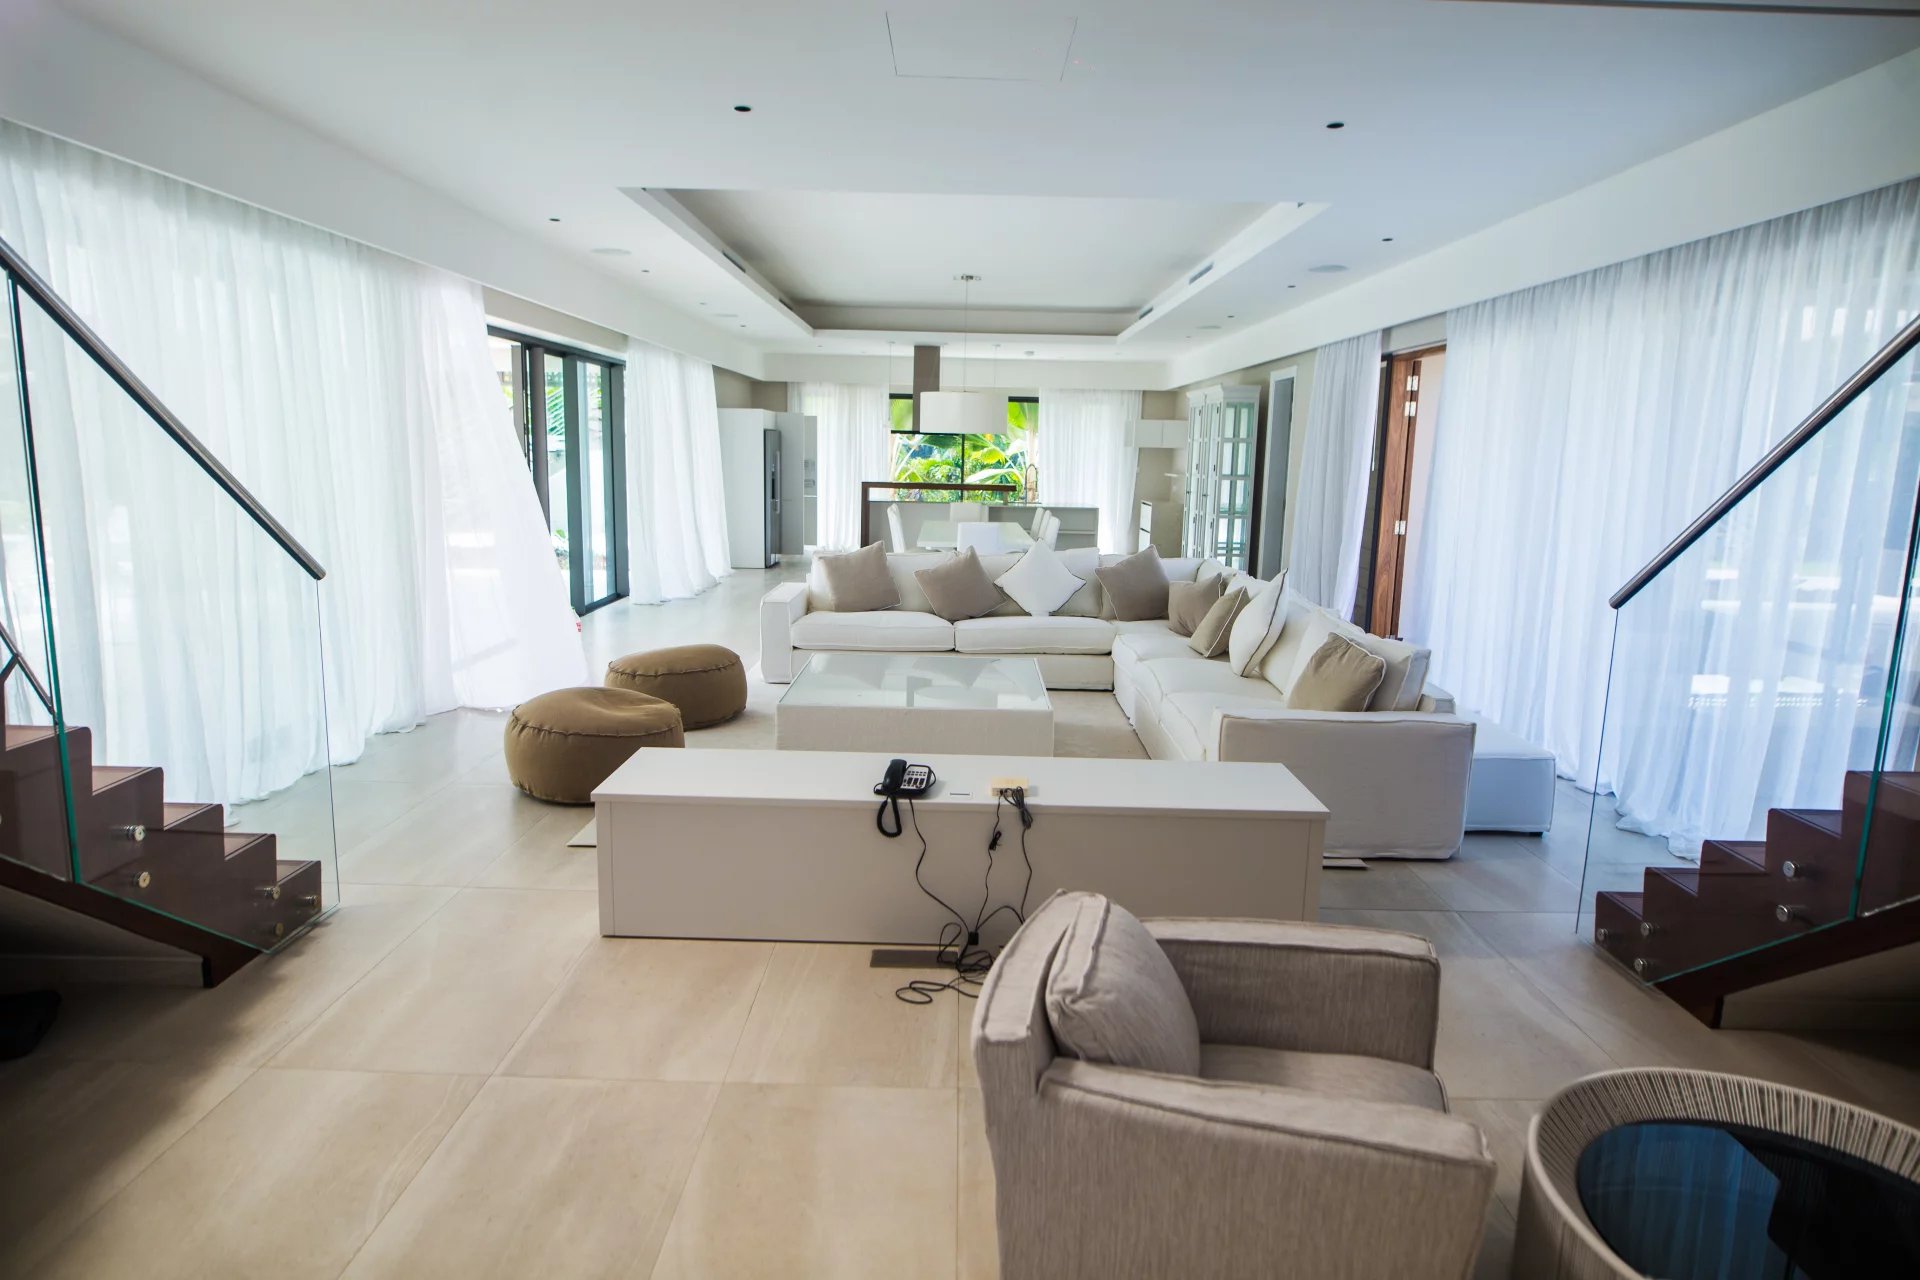 BEAU CHAMP - Contemporary villa - 5 bedrooms